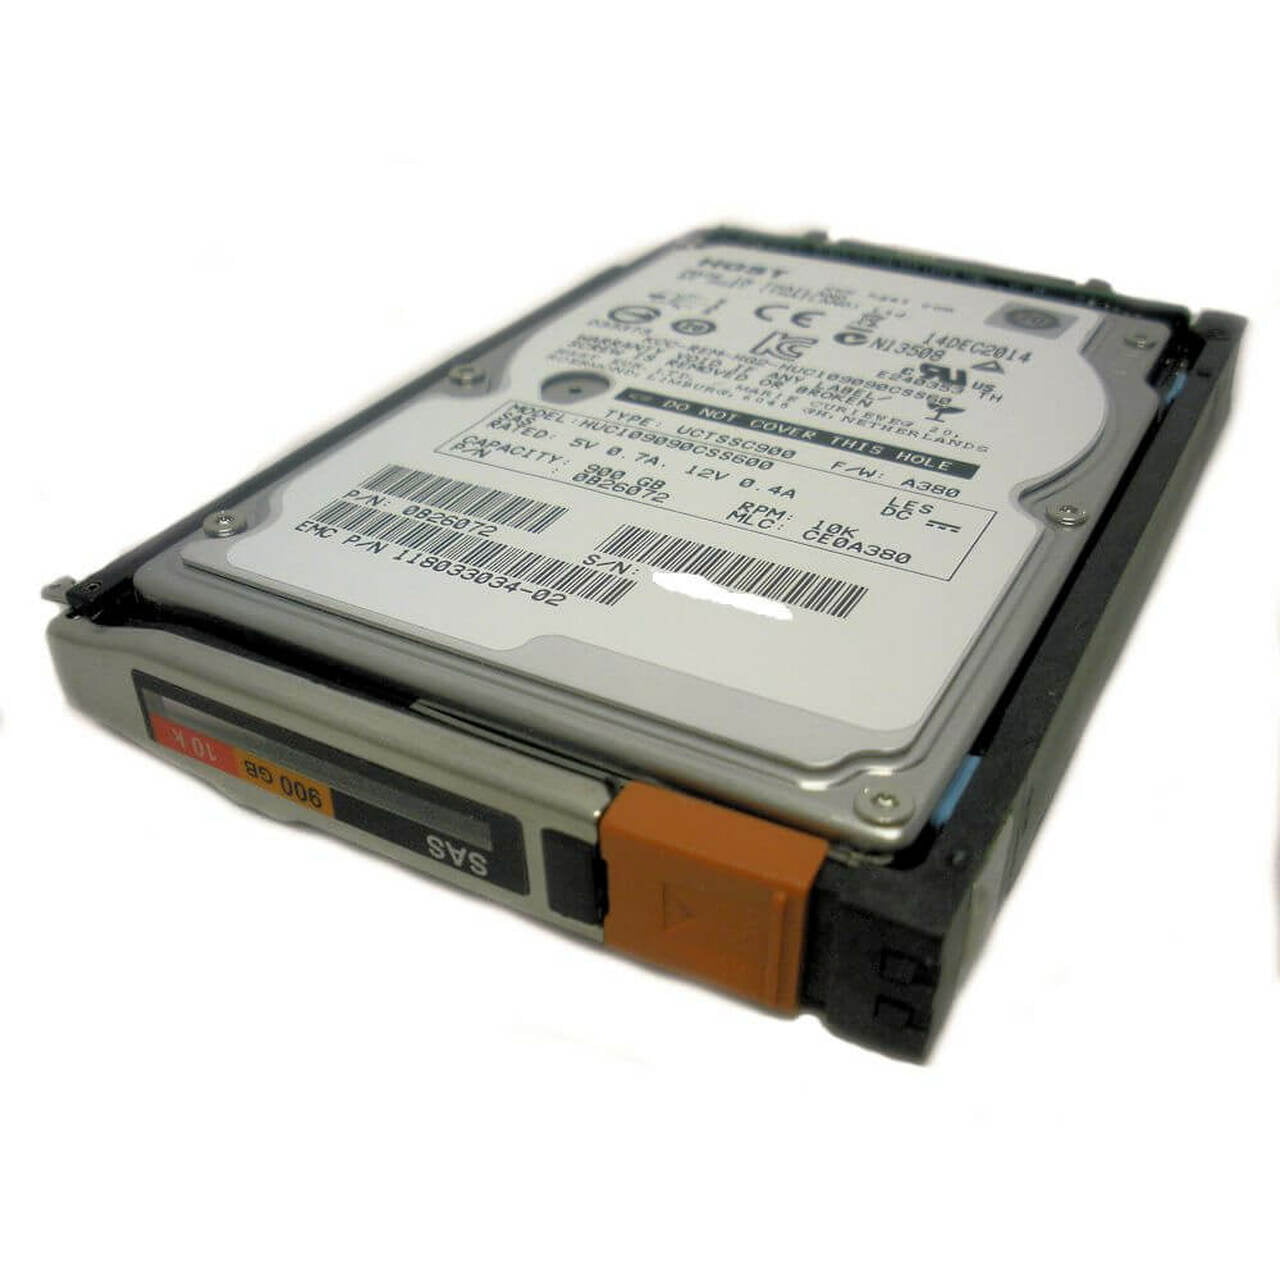 356914-008 Genuine 72.8-GB U320 SCSI Genuine 15K